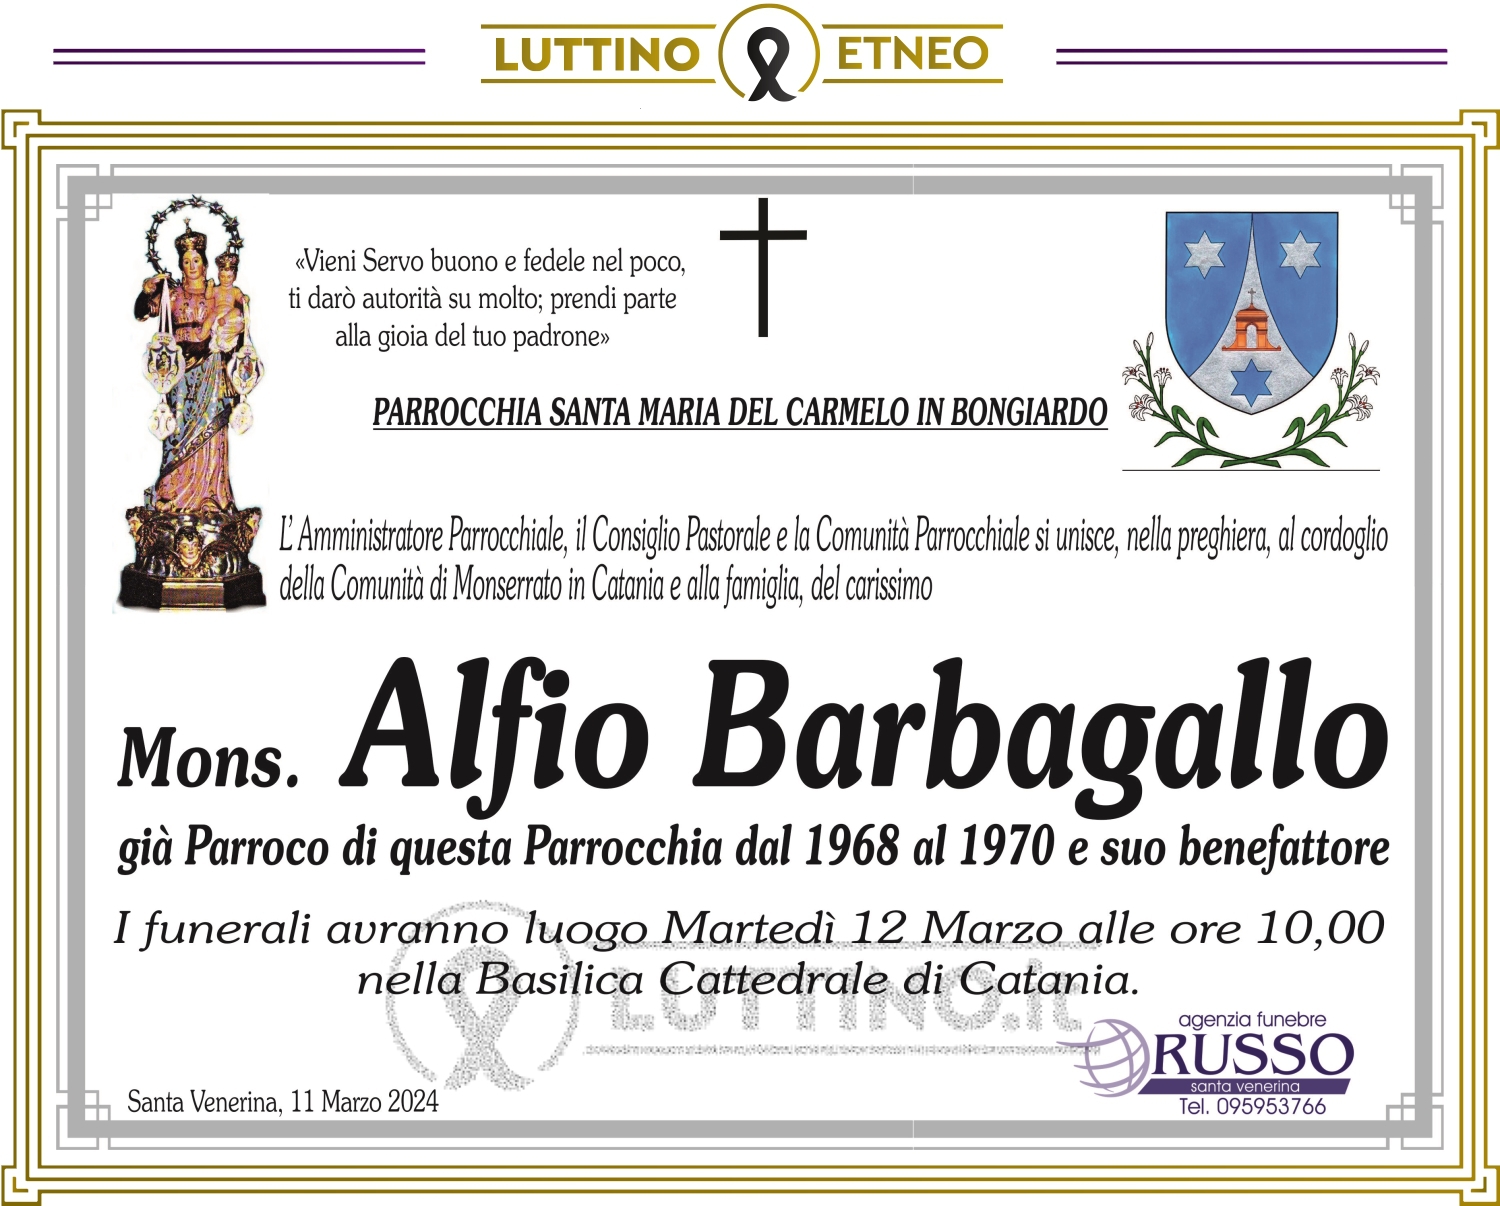 Mons. Alfio Barbagallo